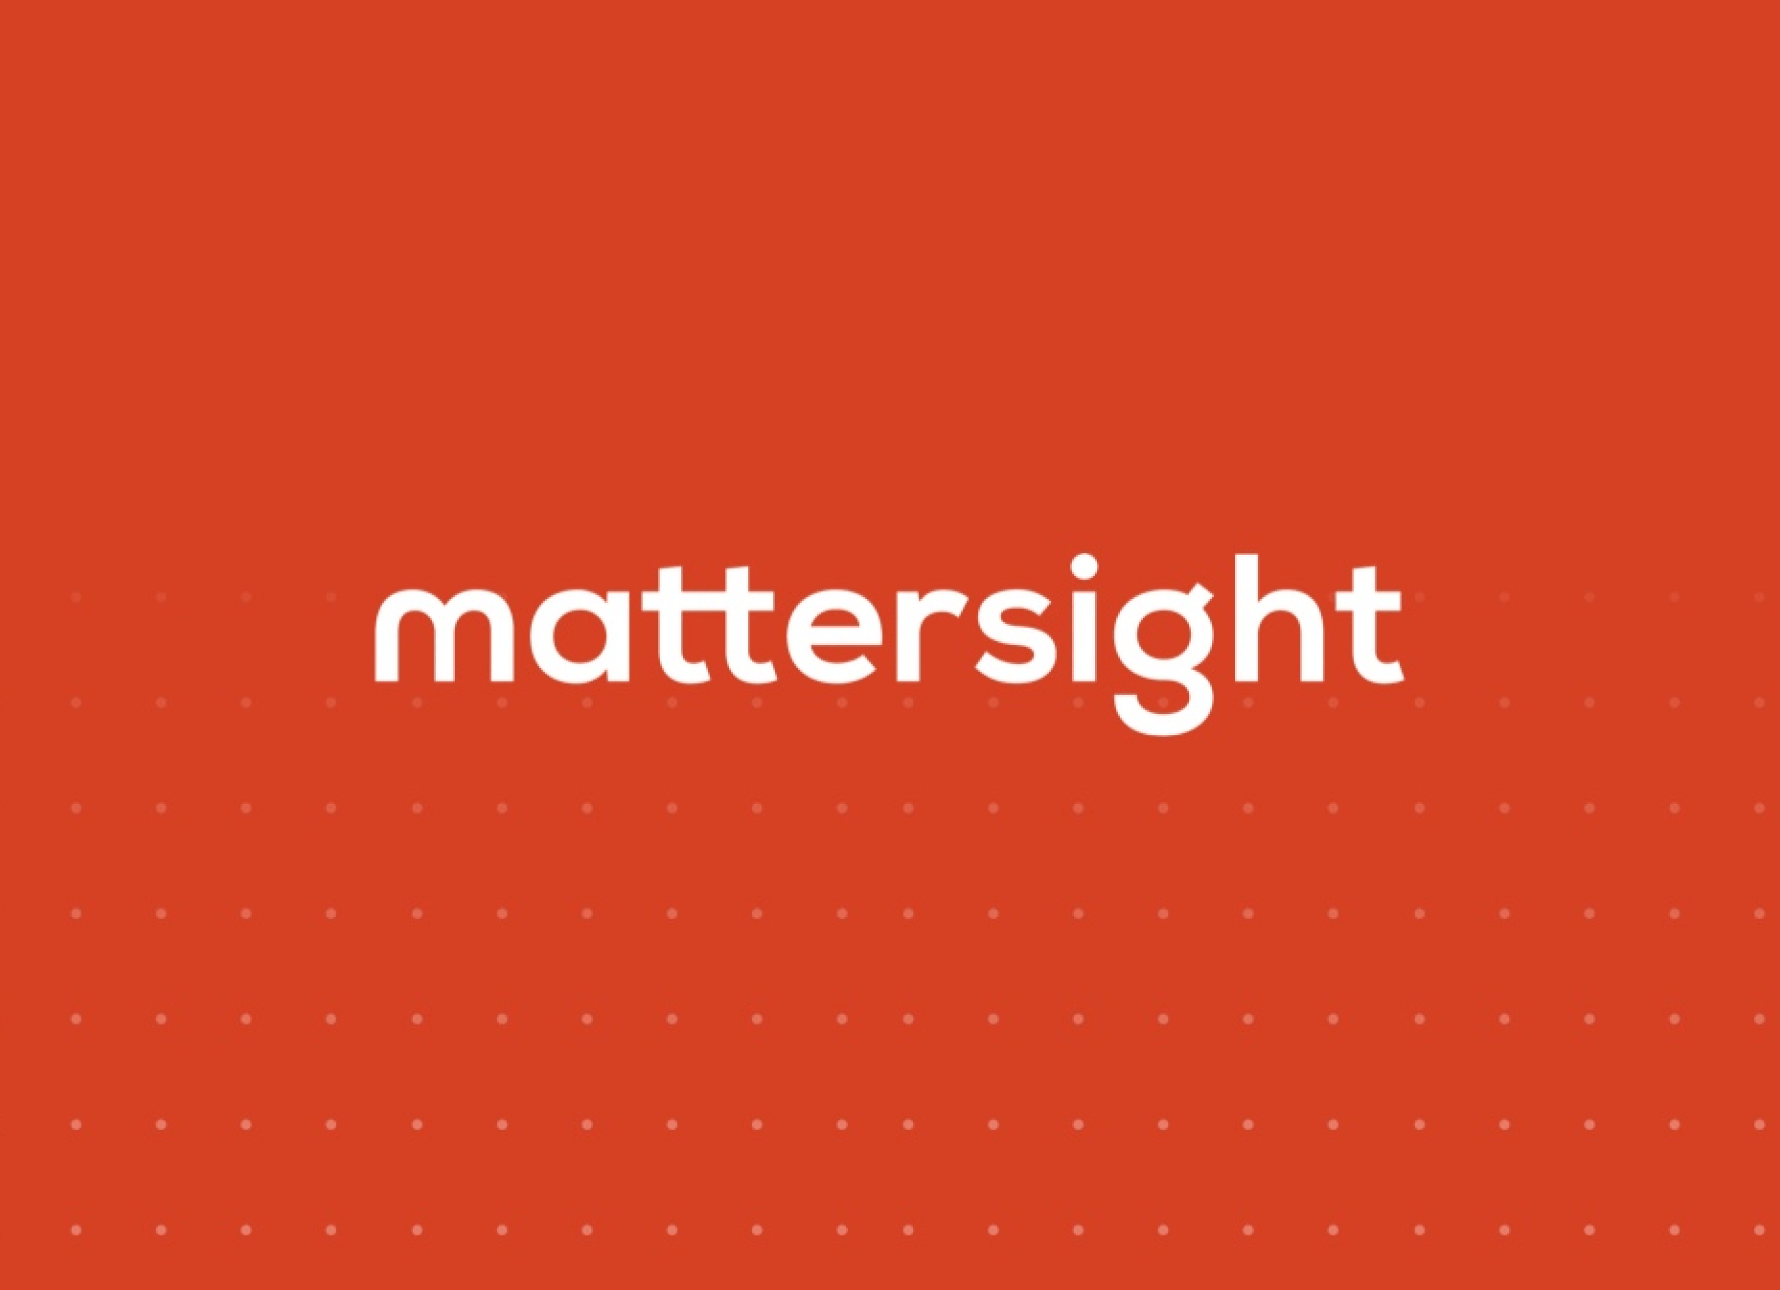 mattersight logo on orange-red background